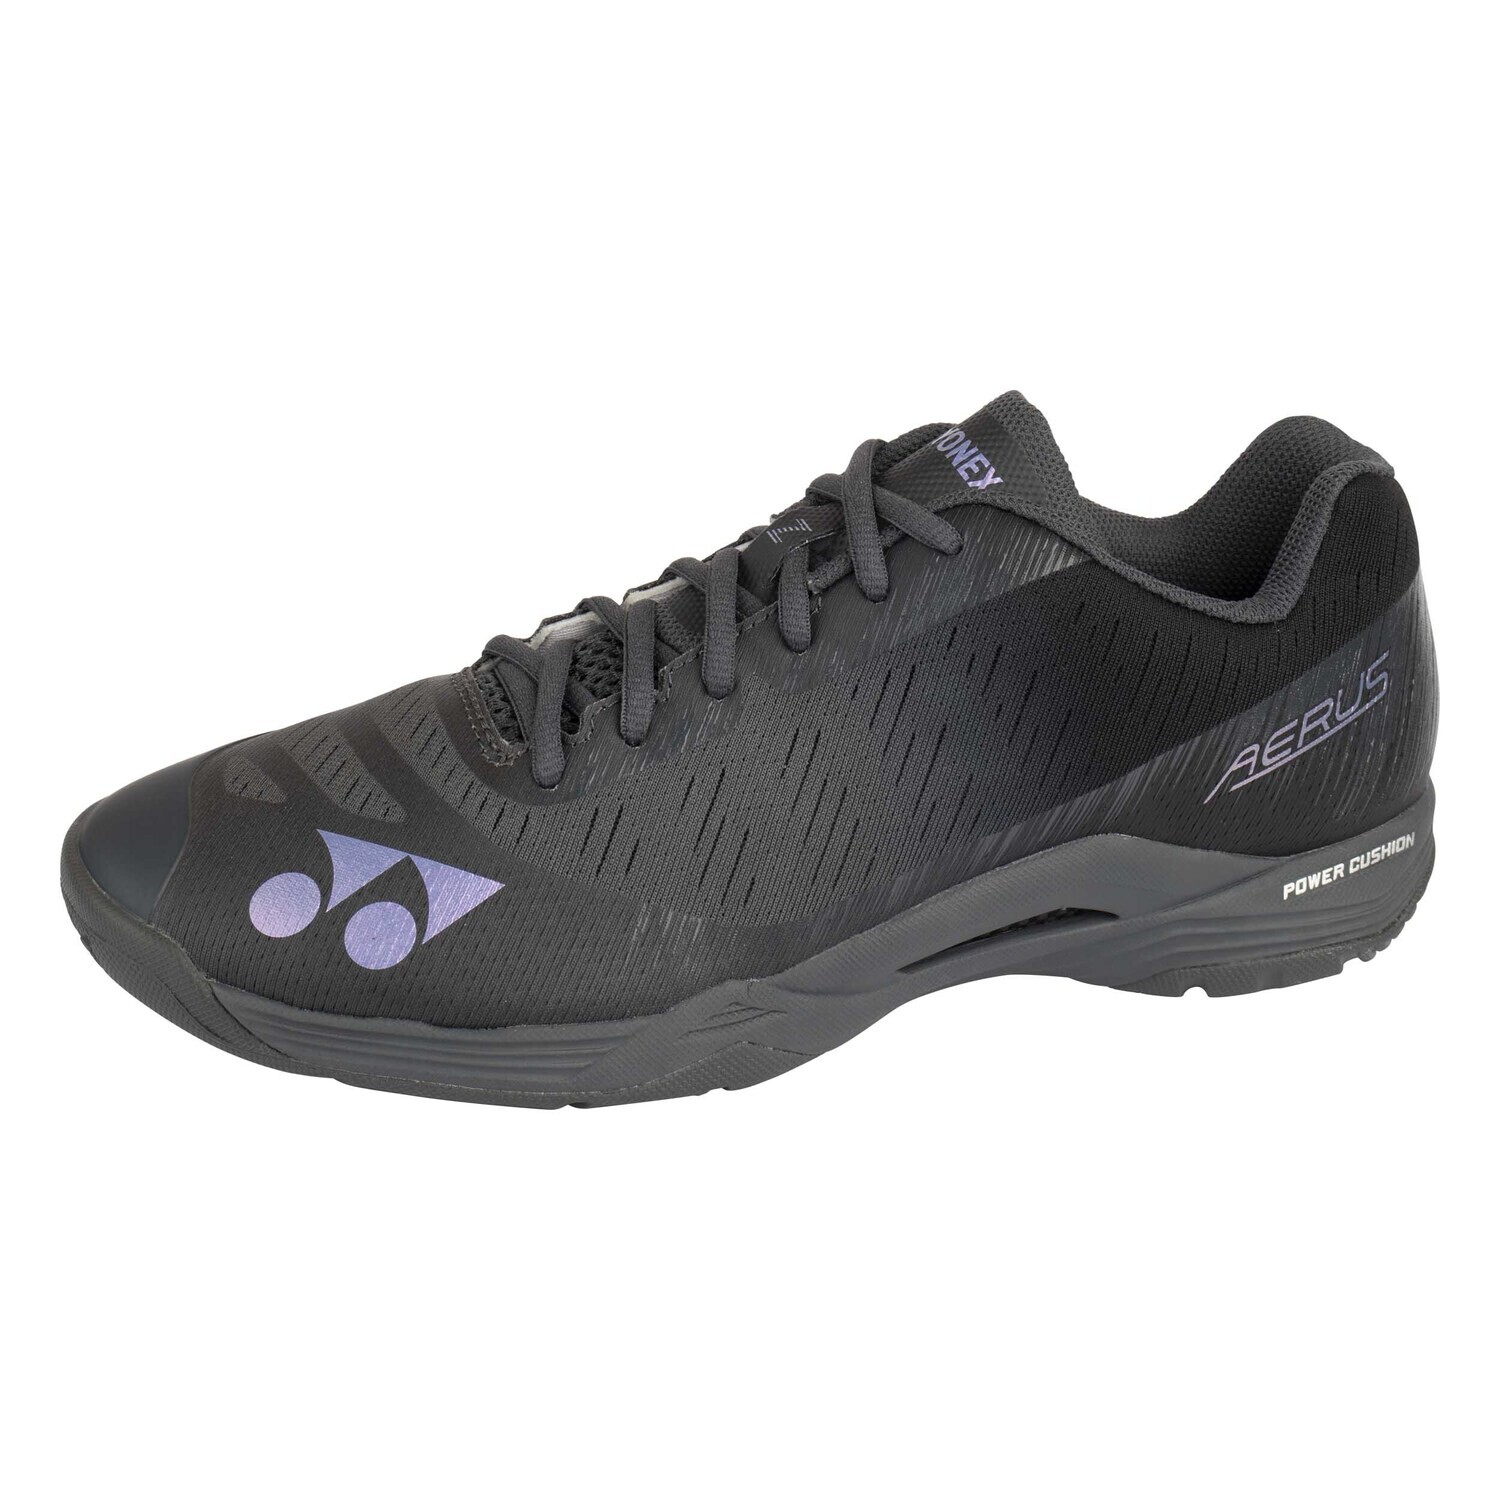 Yonex Power Cushion Aerus Z Men's Badminton Shoes - Dark Grey